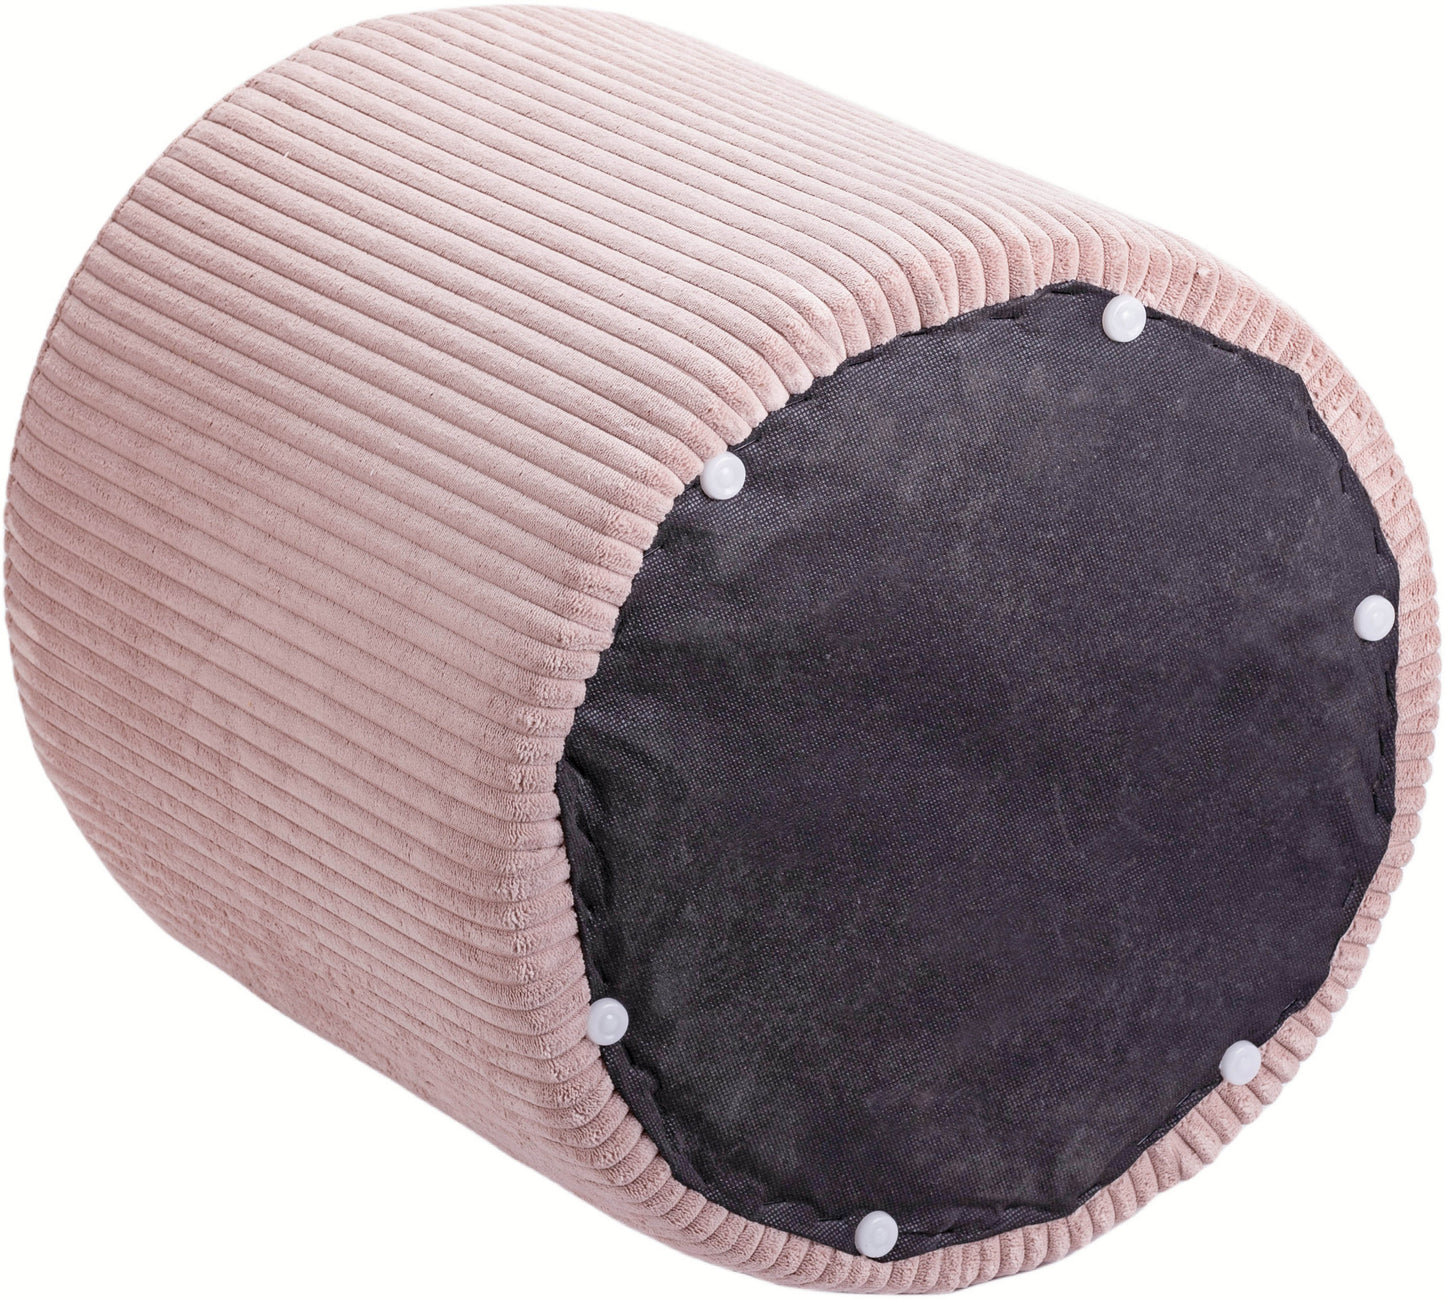 serafina pink microsuede fabric ottoman/stool pink